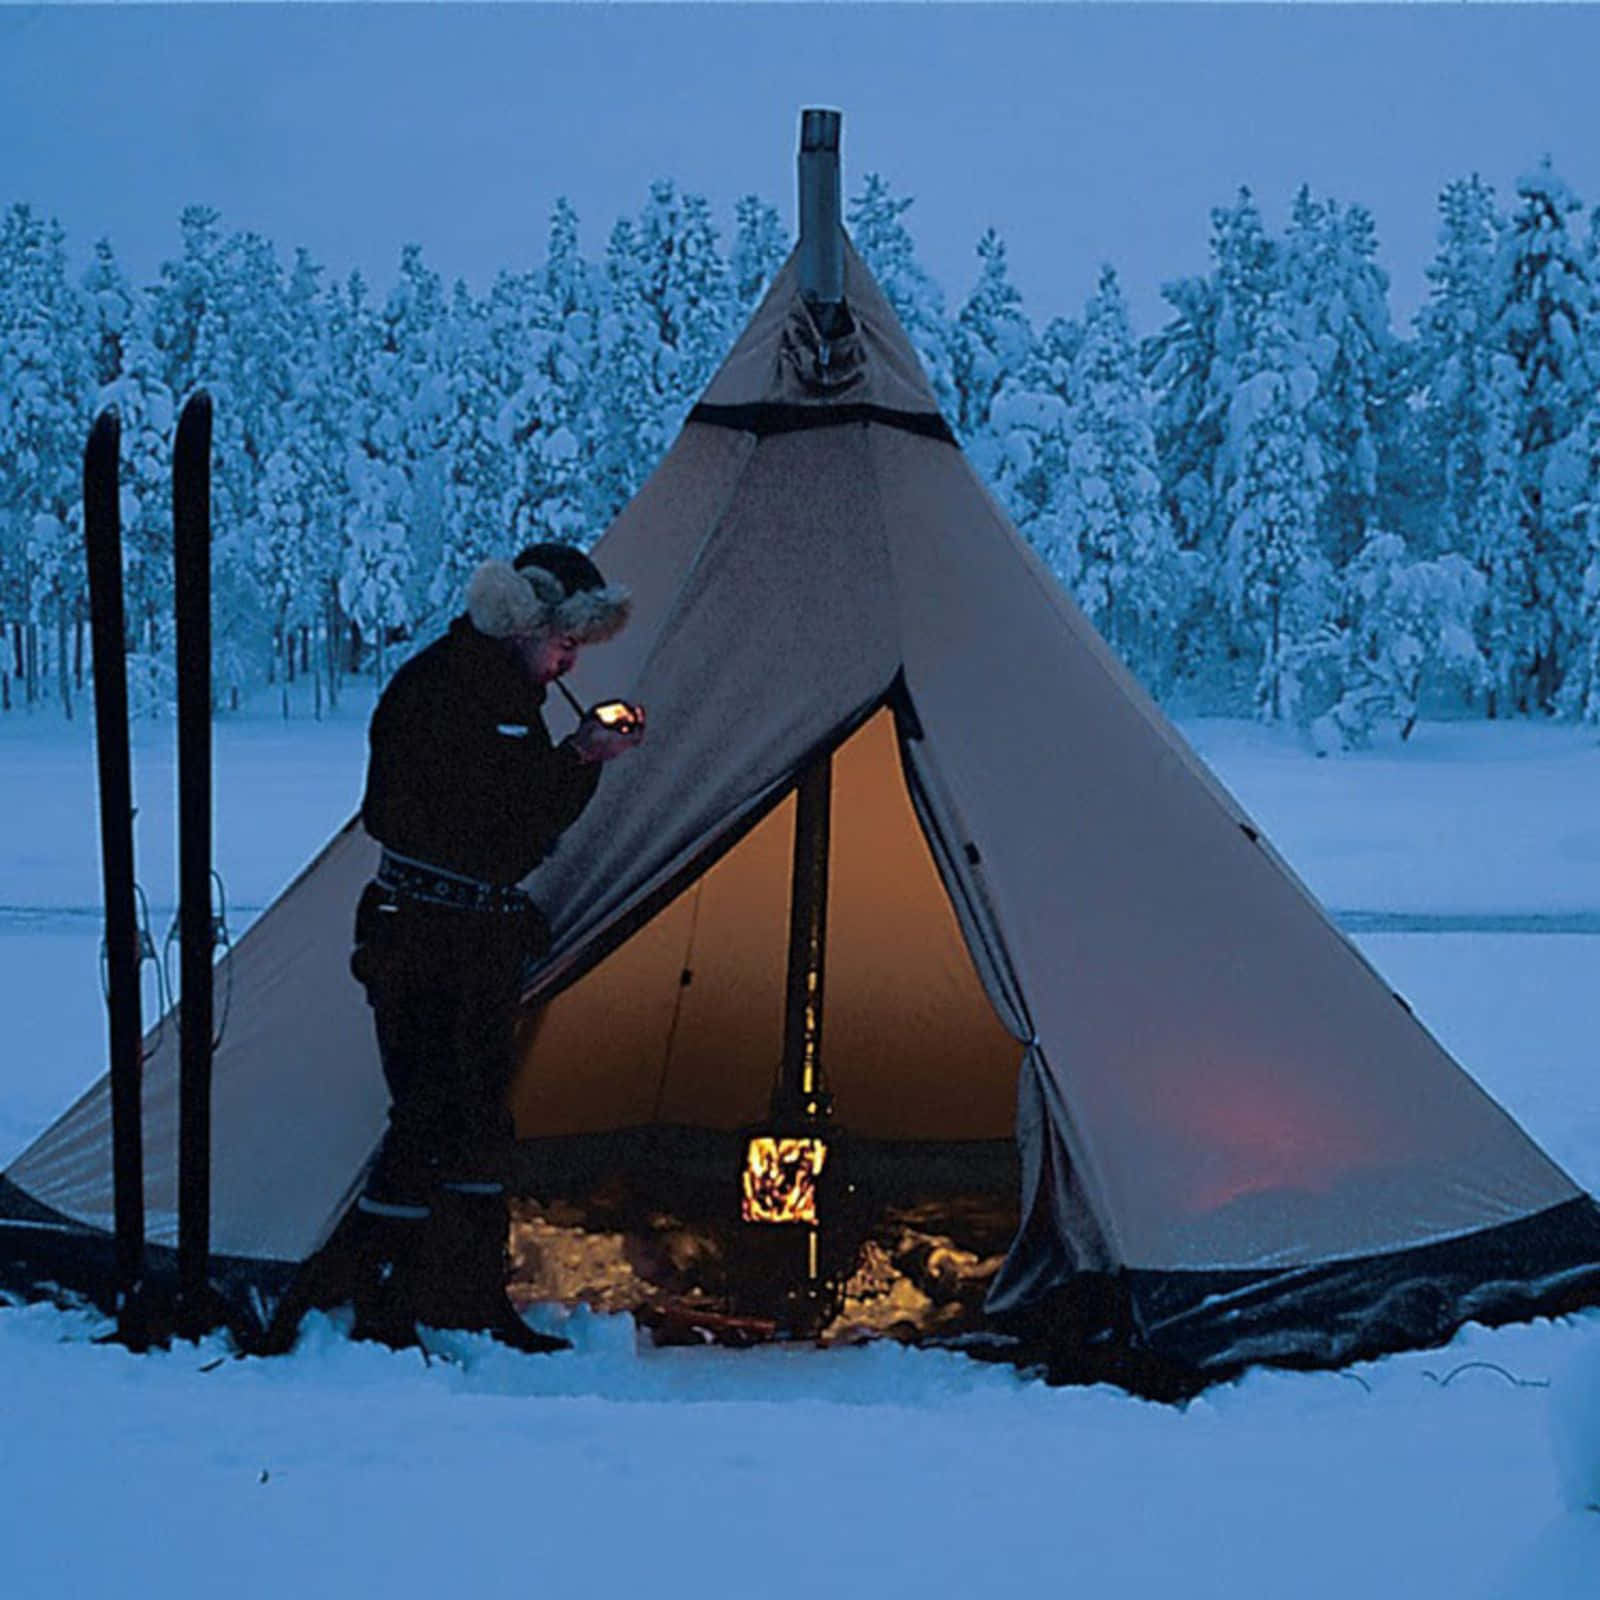 Winter Camping under the Stars Wallpaper